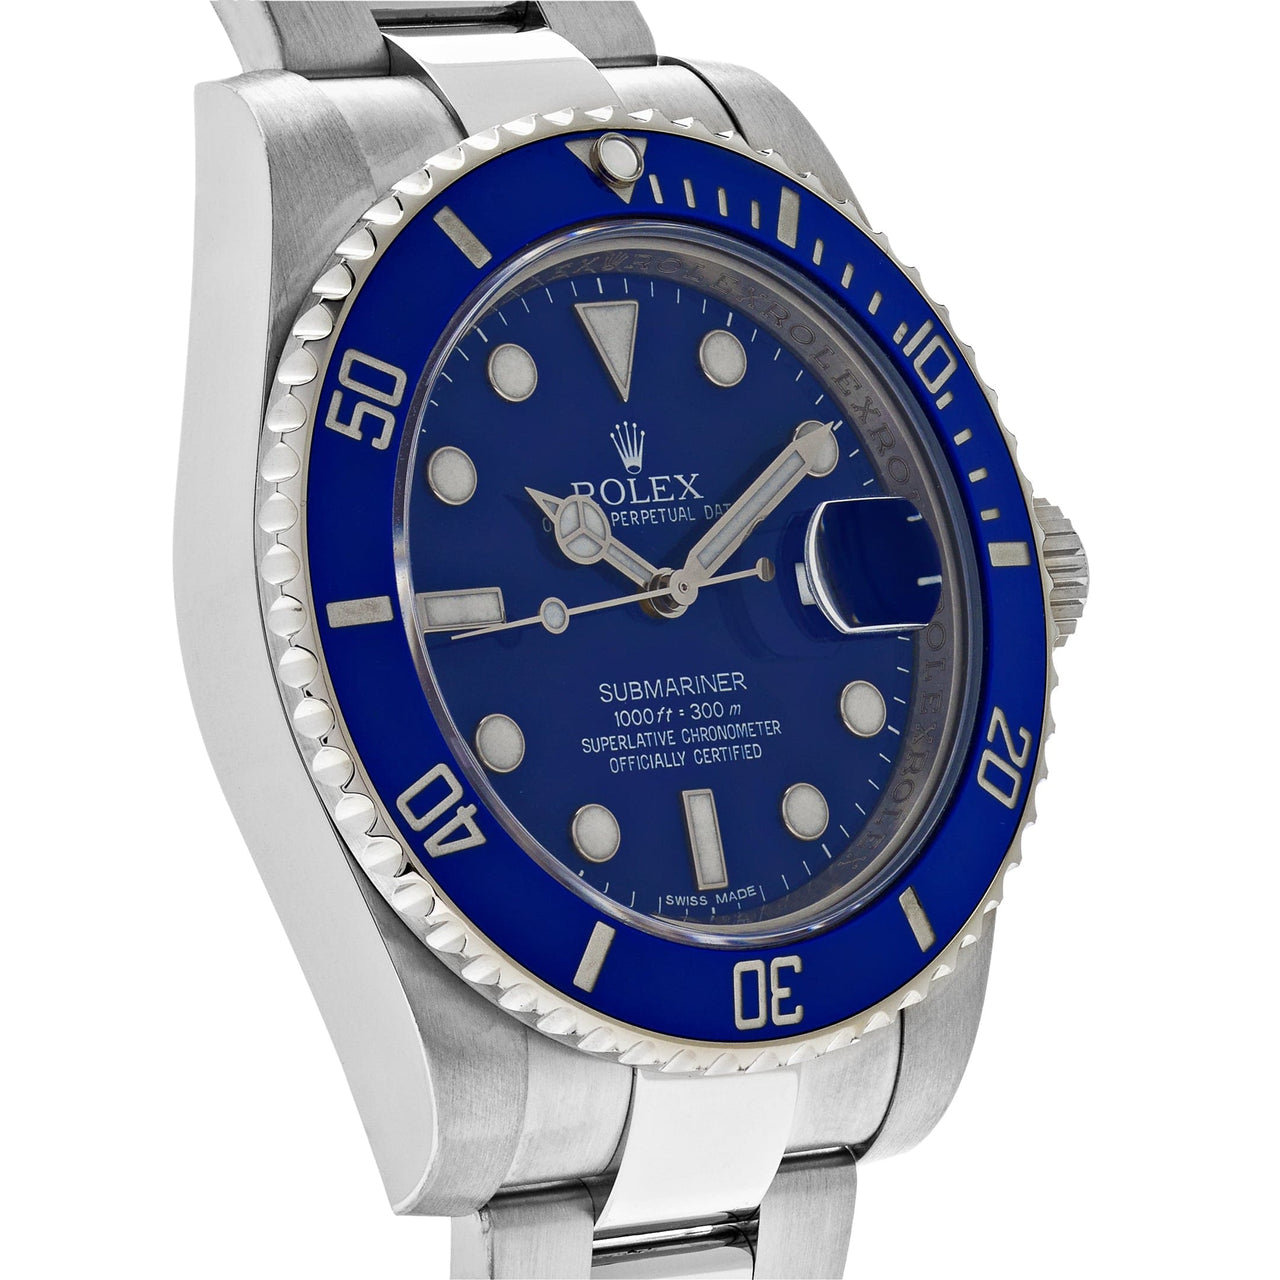 Rolex Submariner Date 40 White Gold Blue Dial Blue Bezel 116619LB wrist aficionado